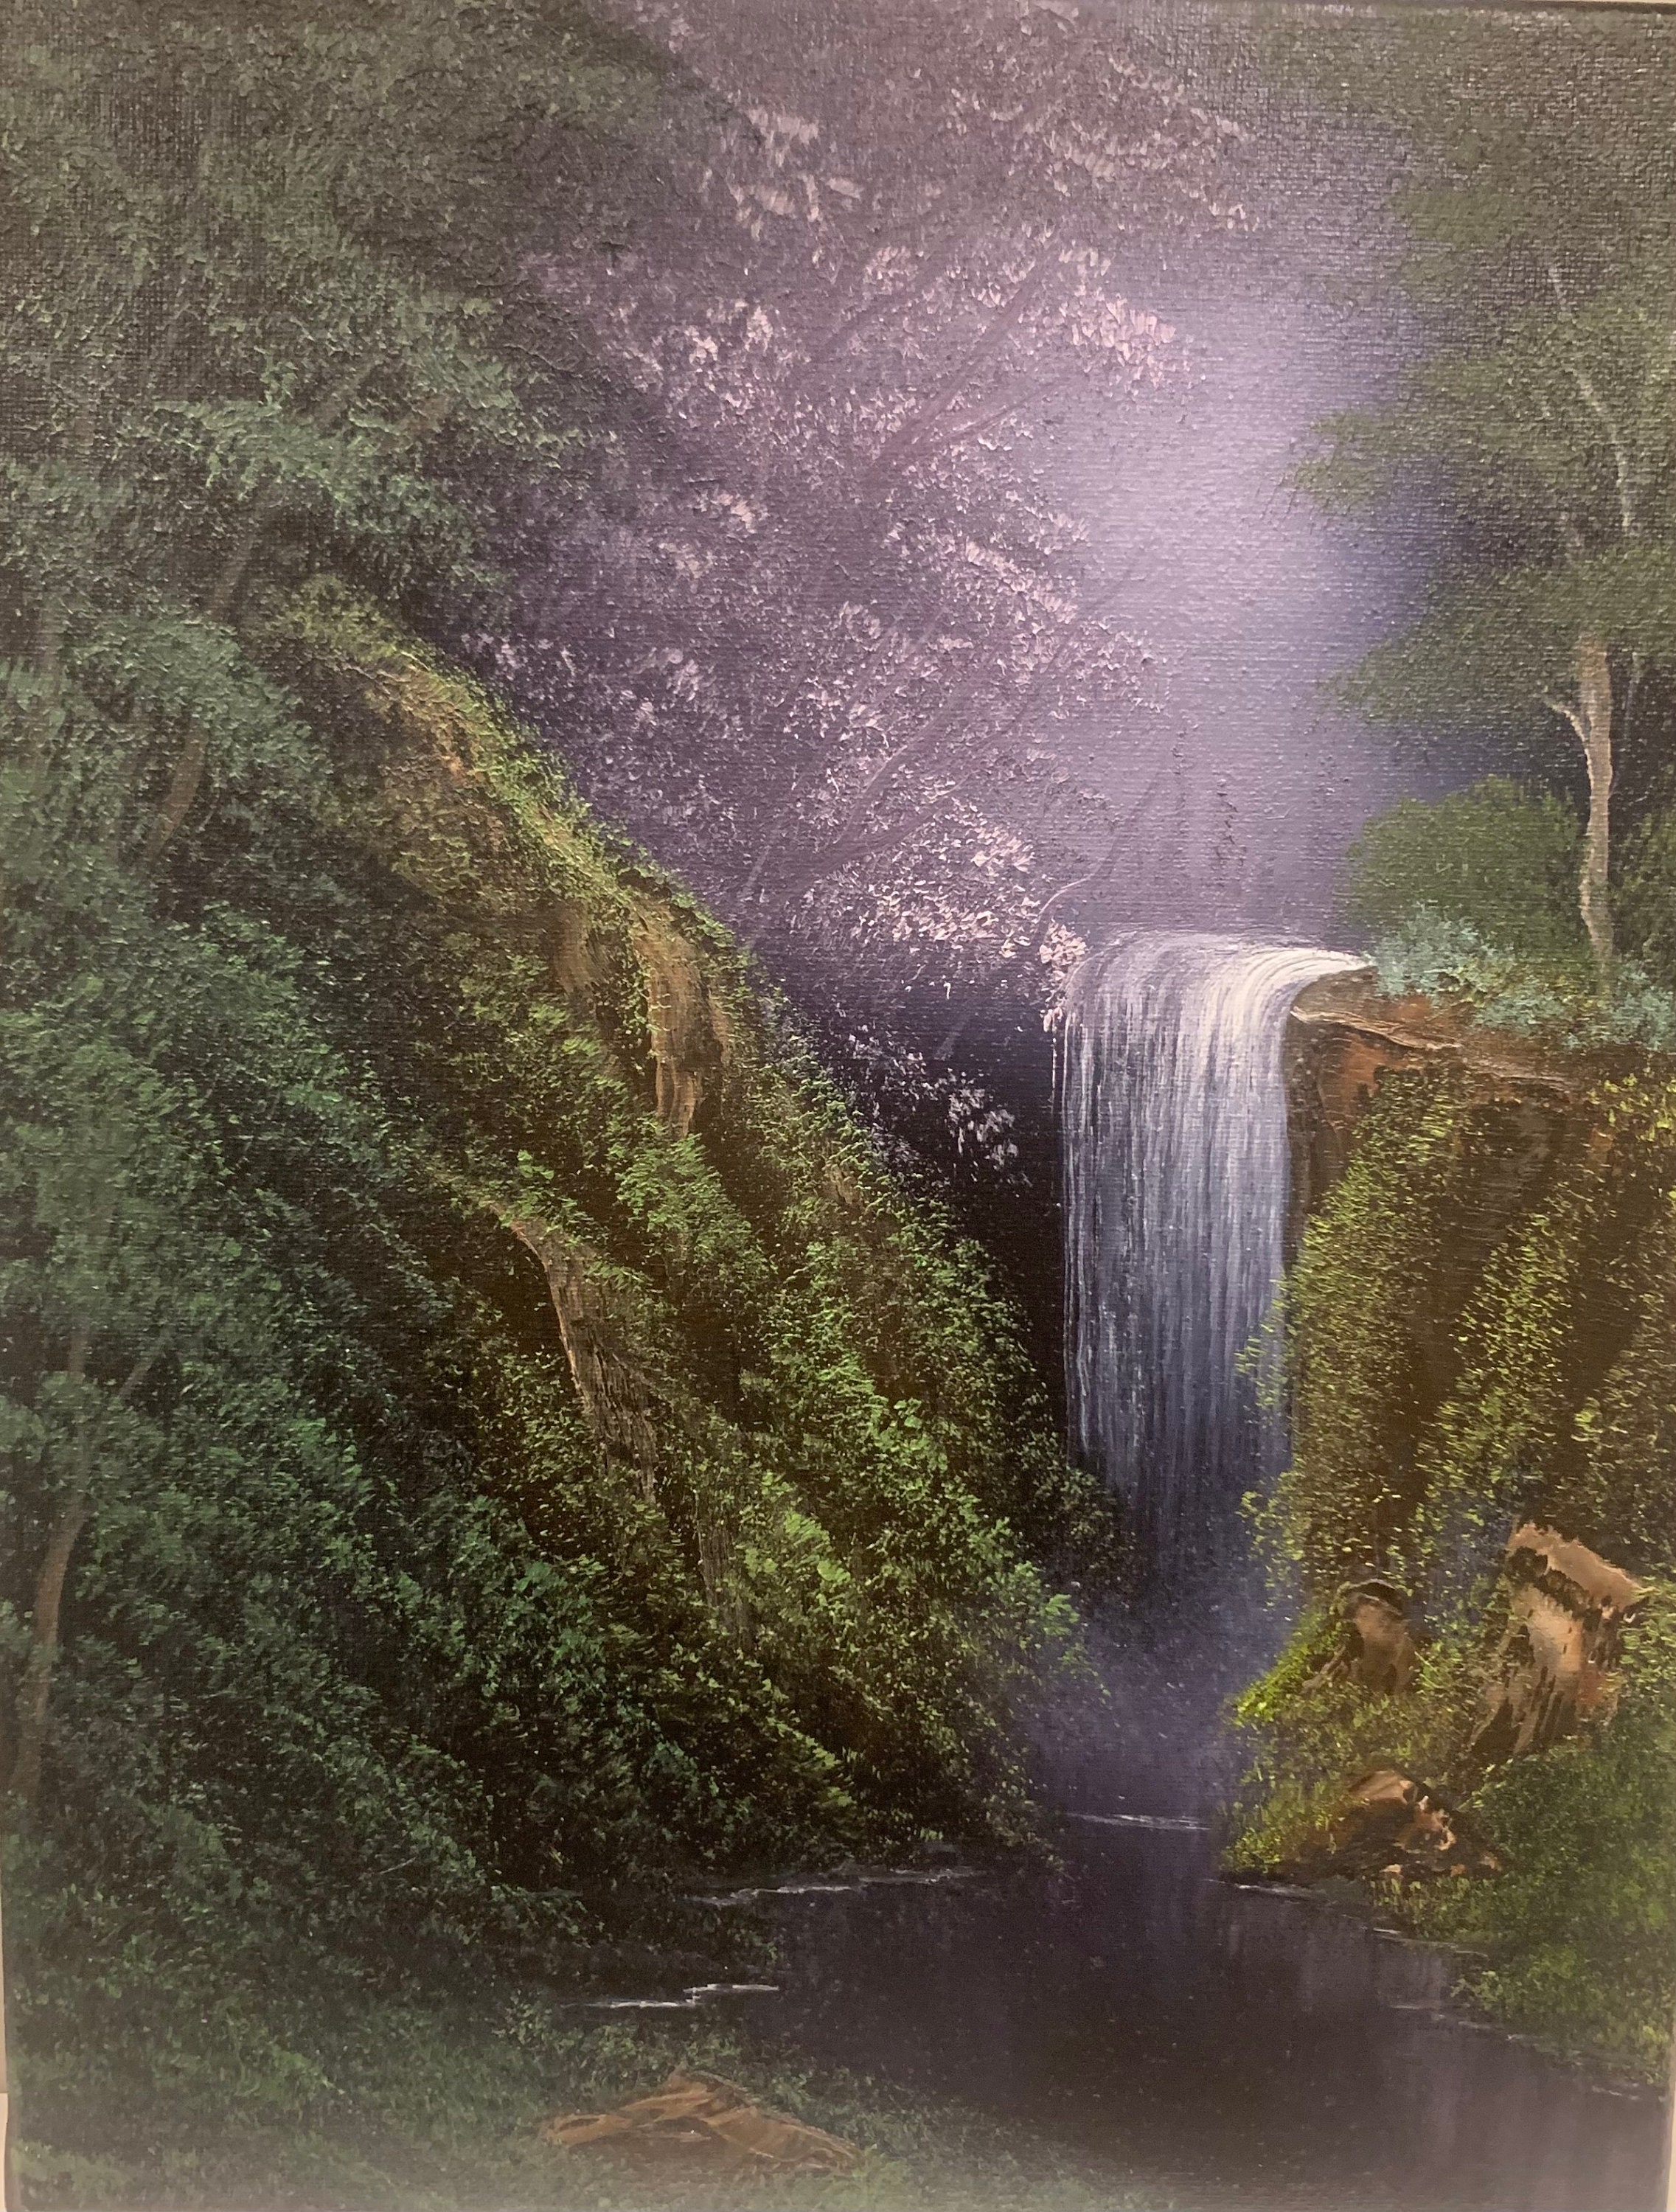 Giclee Print of Bob Ross Inspired Mountain Waterfall 